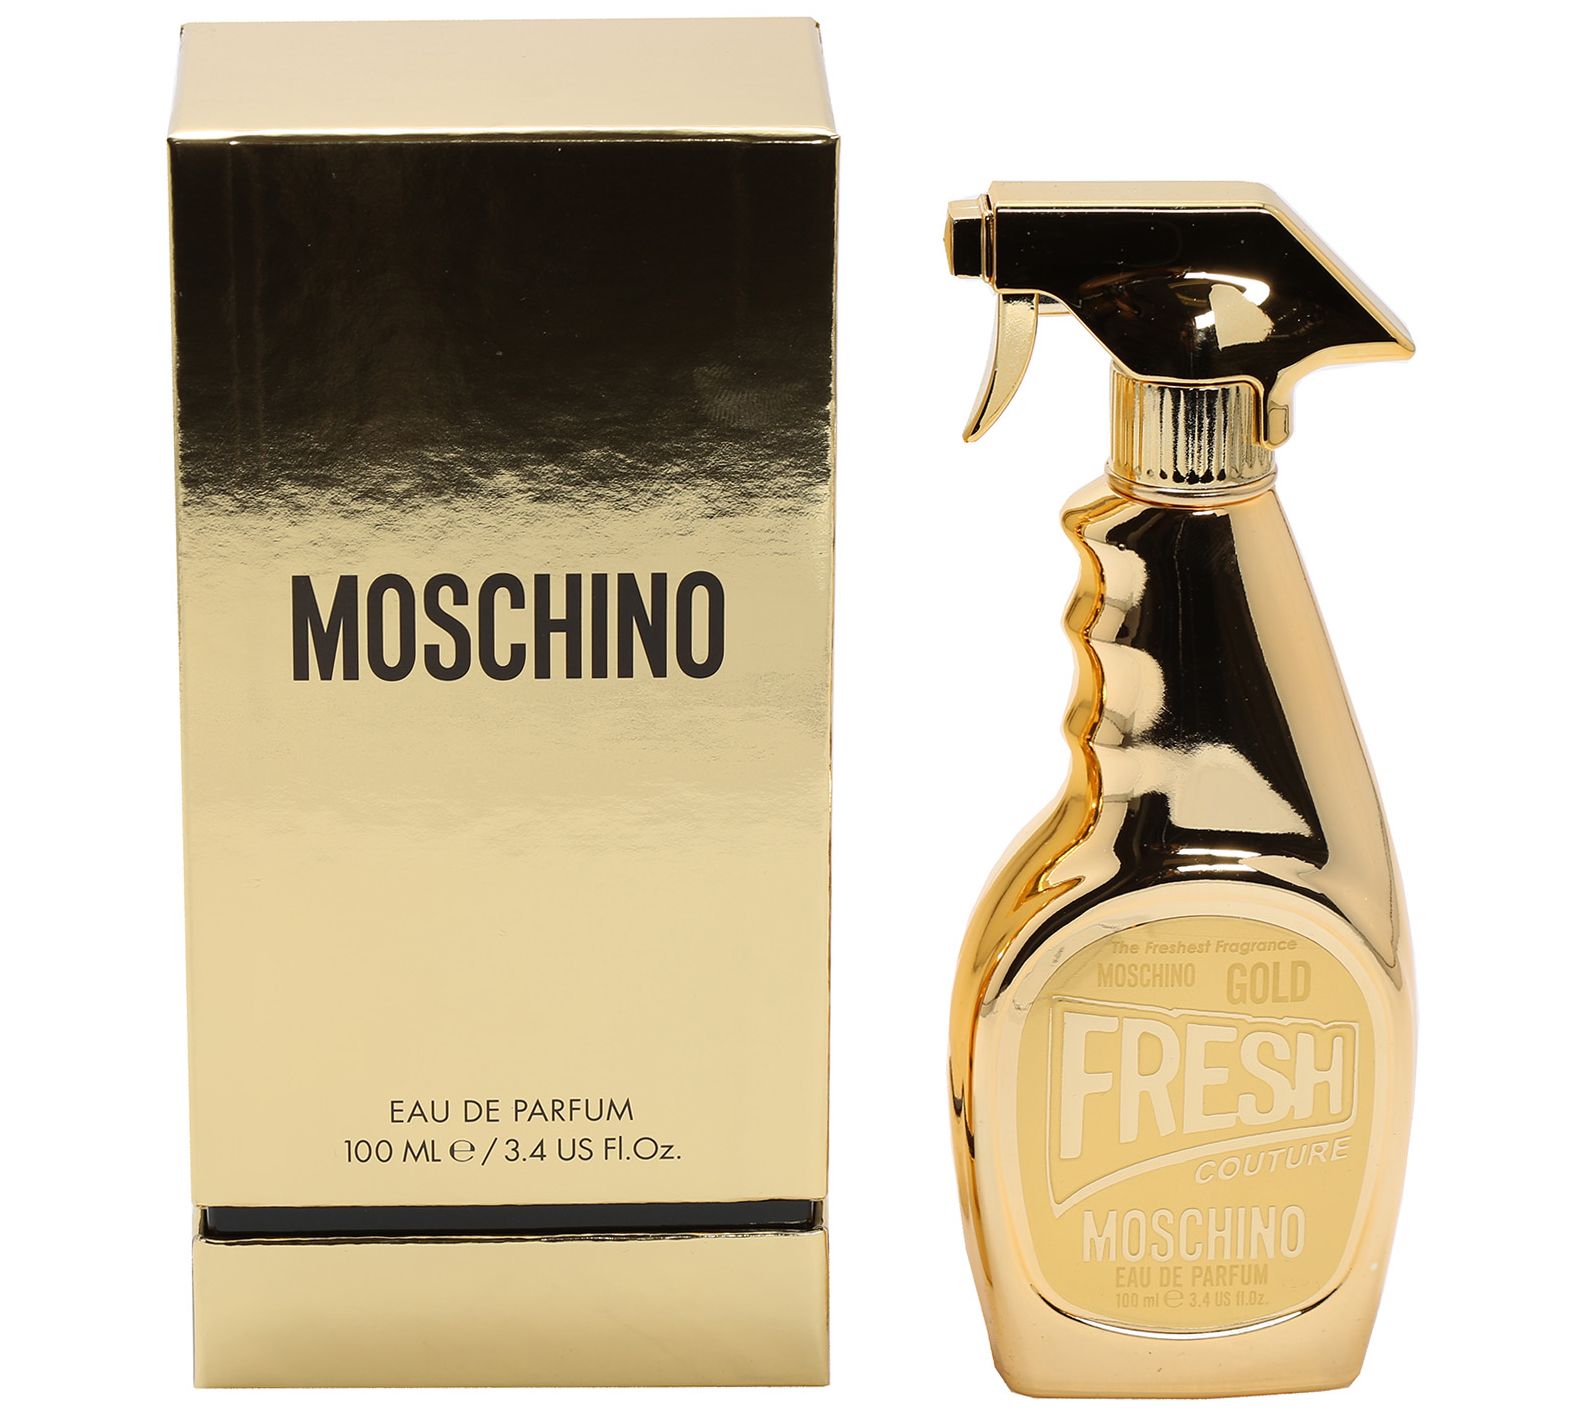 Moschino gold. Moschino Gold Fresh Couture 30мл. Moschino Fresh Gold 100 мл. Moschino Gold Fresh аромат. Голд Москино женские.